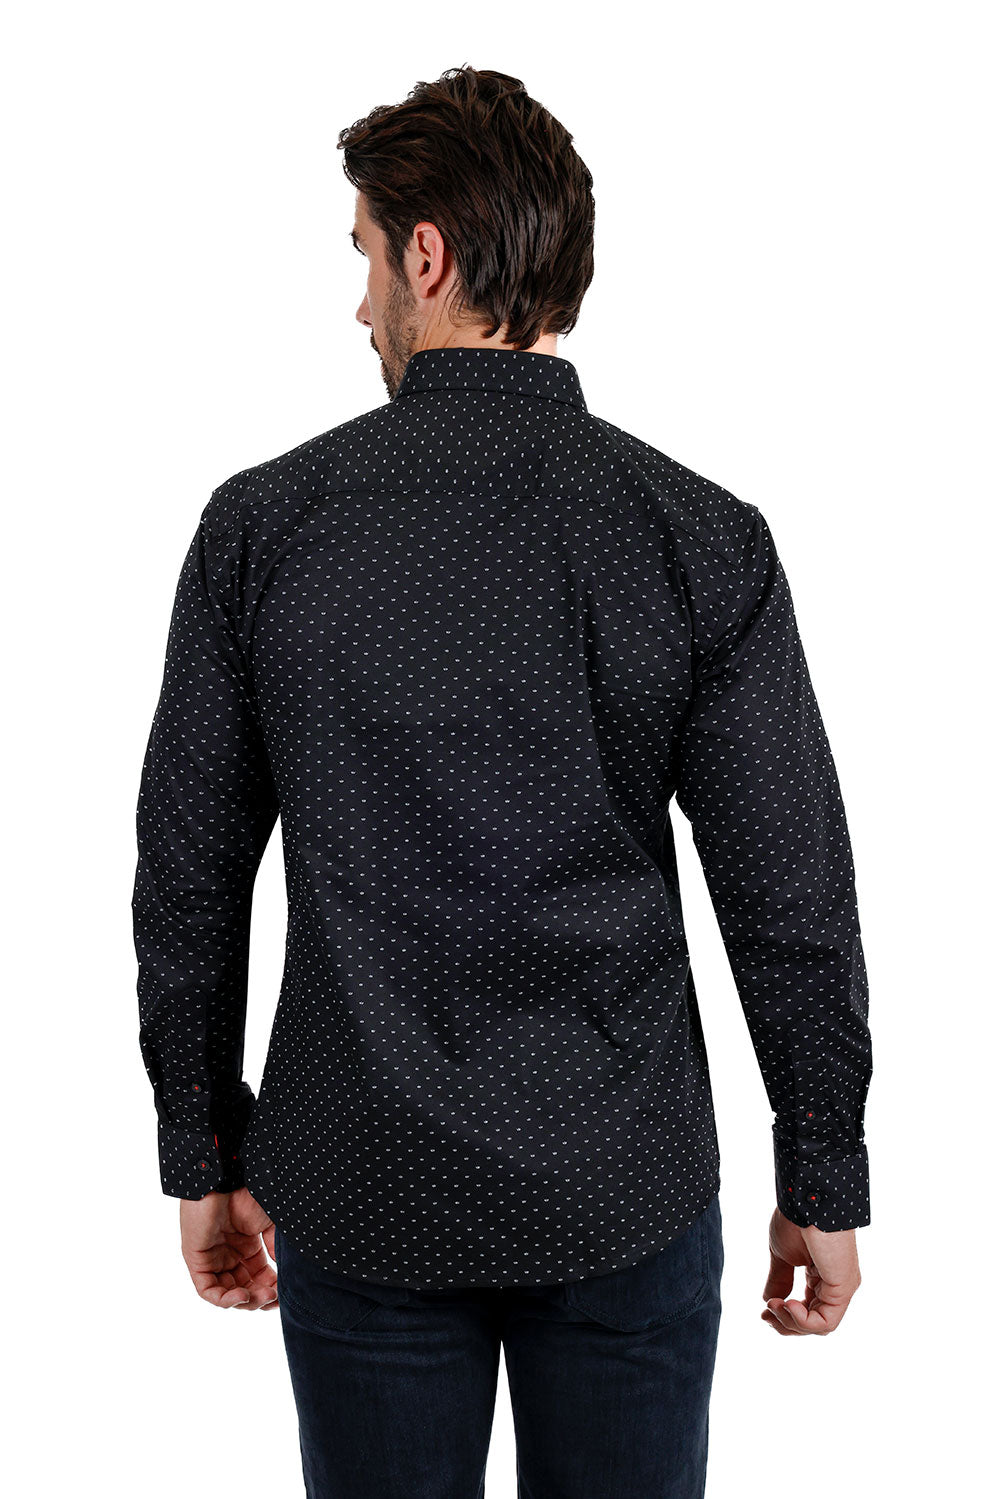 BARABAS Men's Solid Color Polka Dot Print Long Sleeve Shirts 3B358 Black